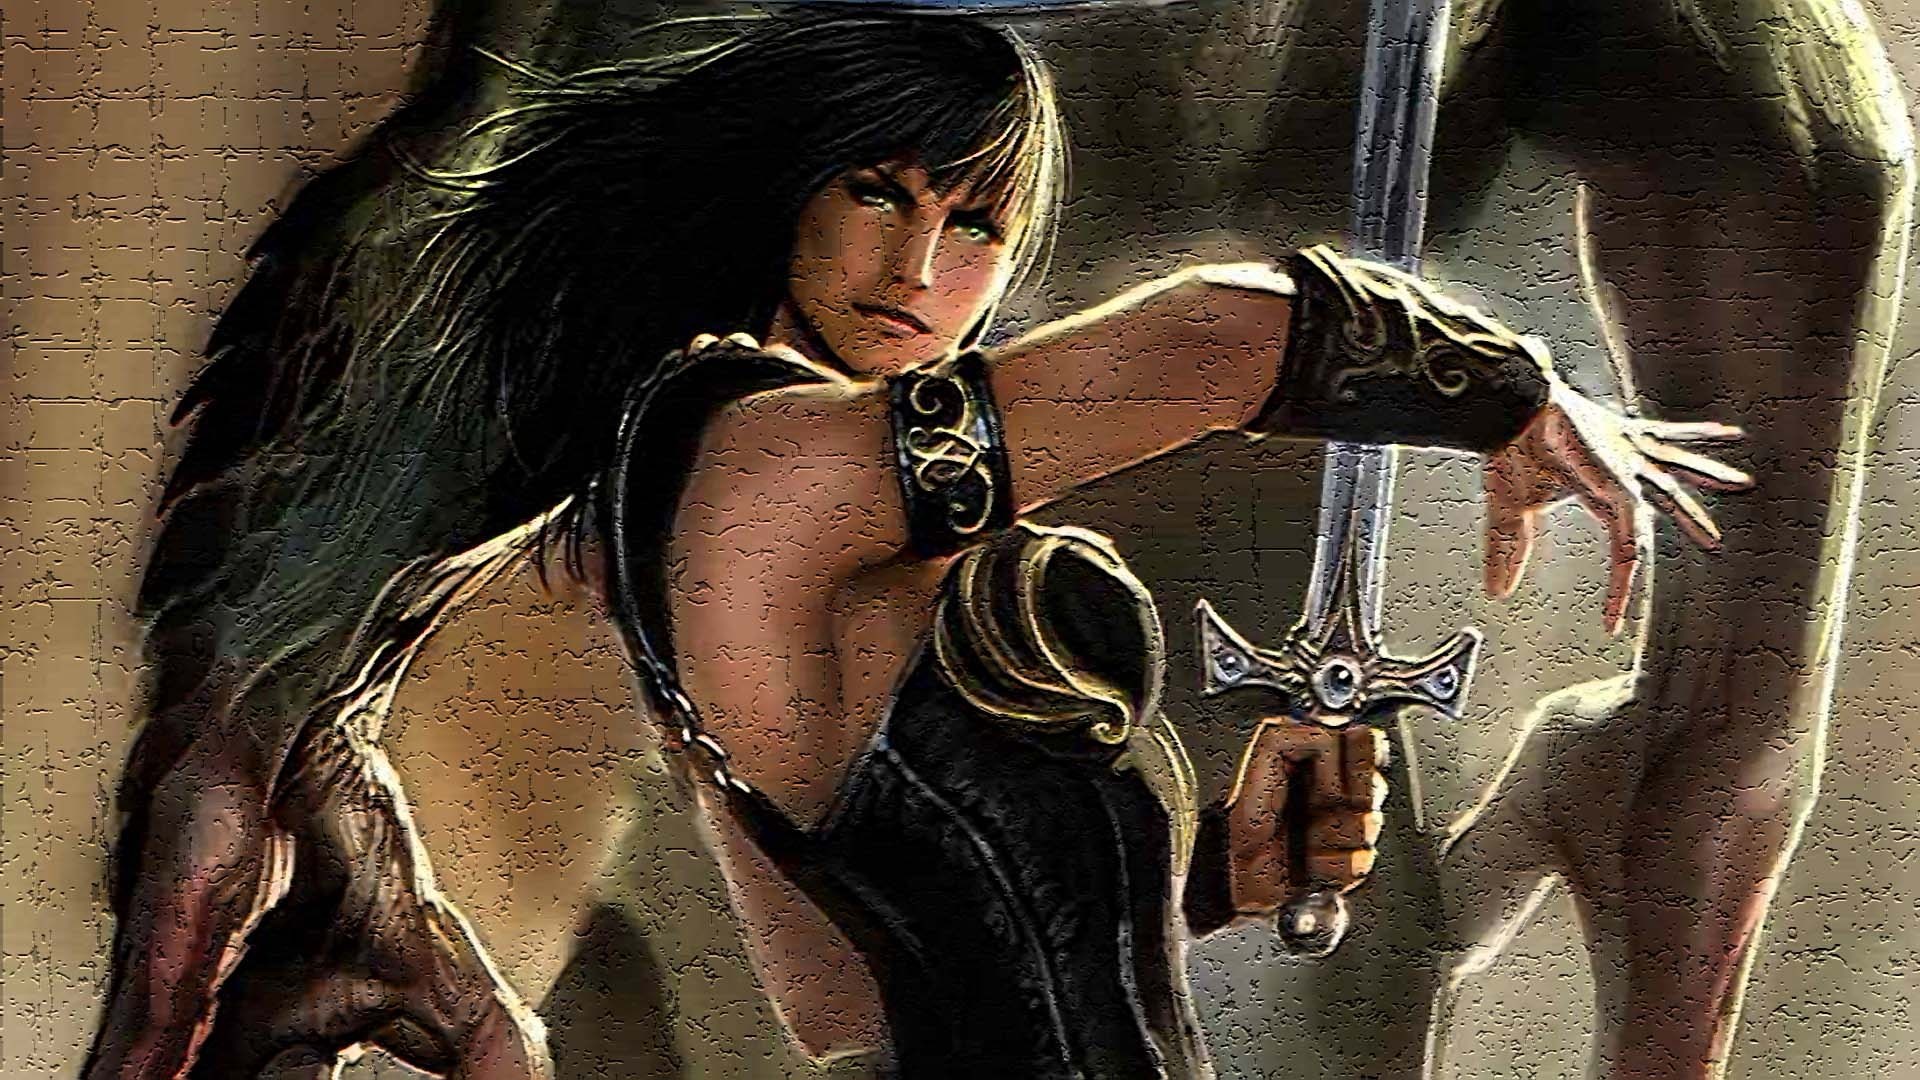 Xena: Warrior Princess Wallpapers